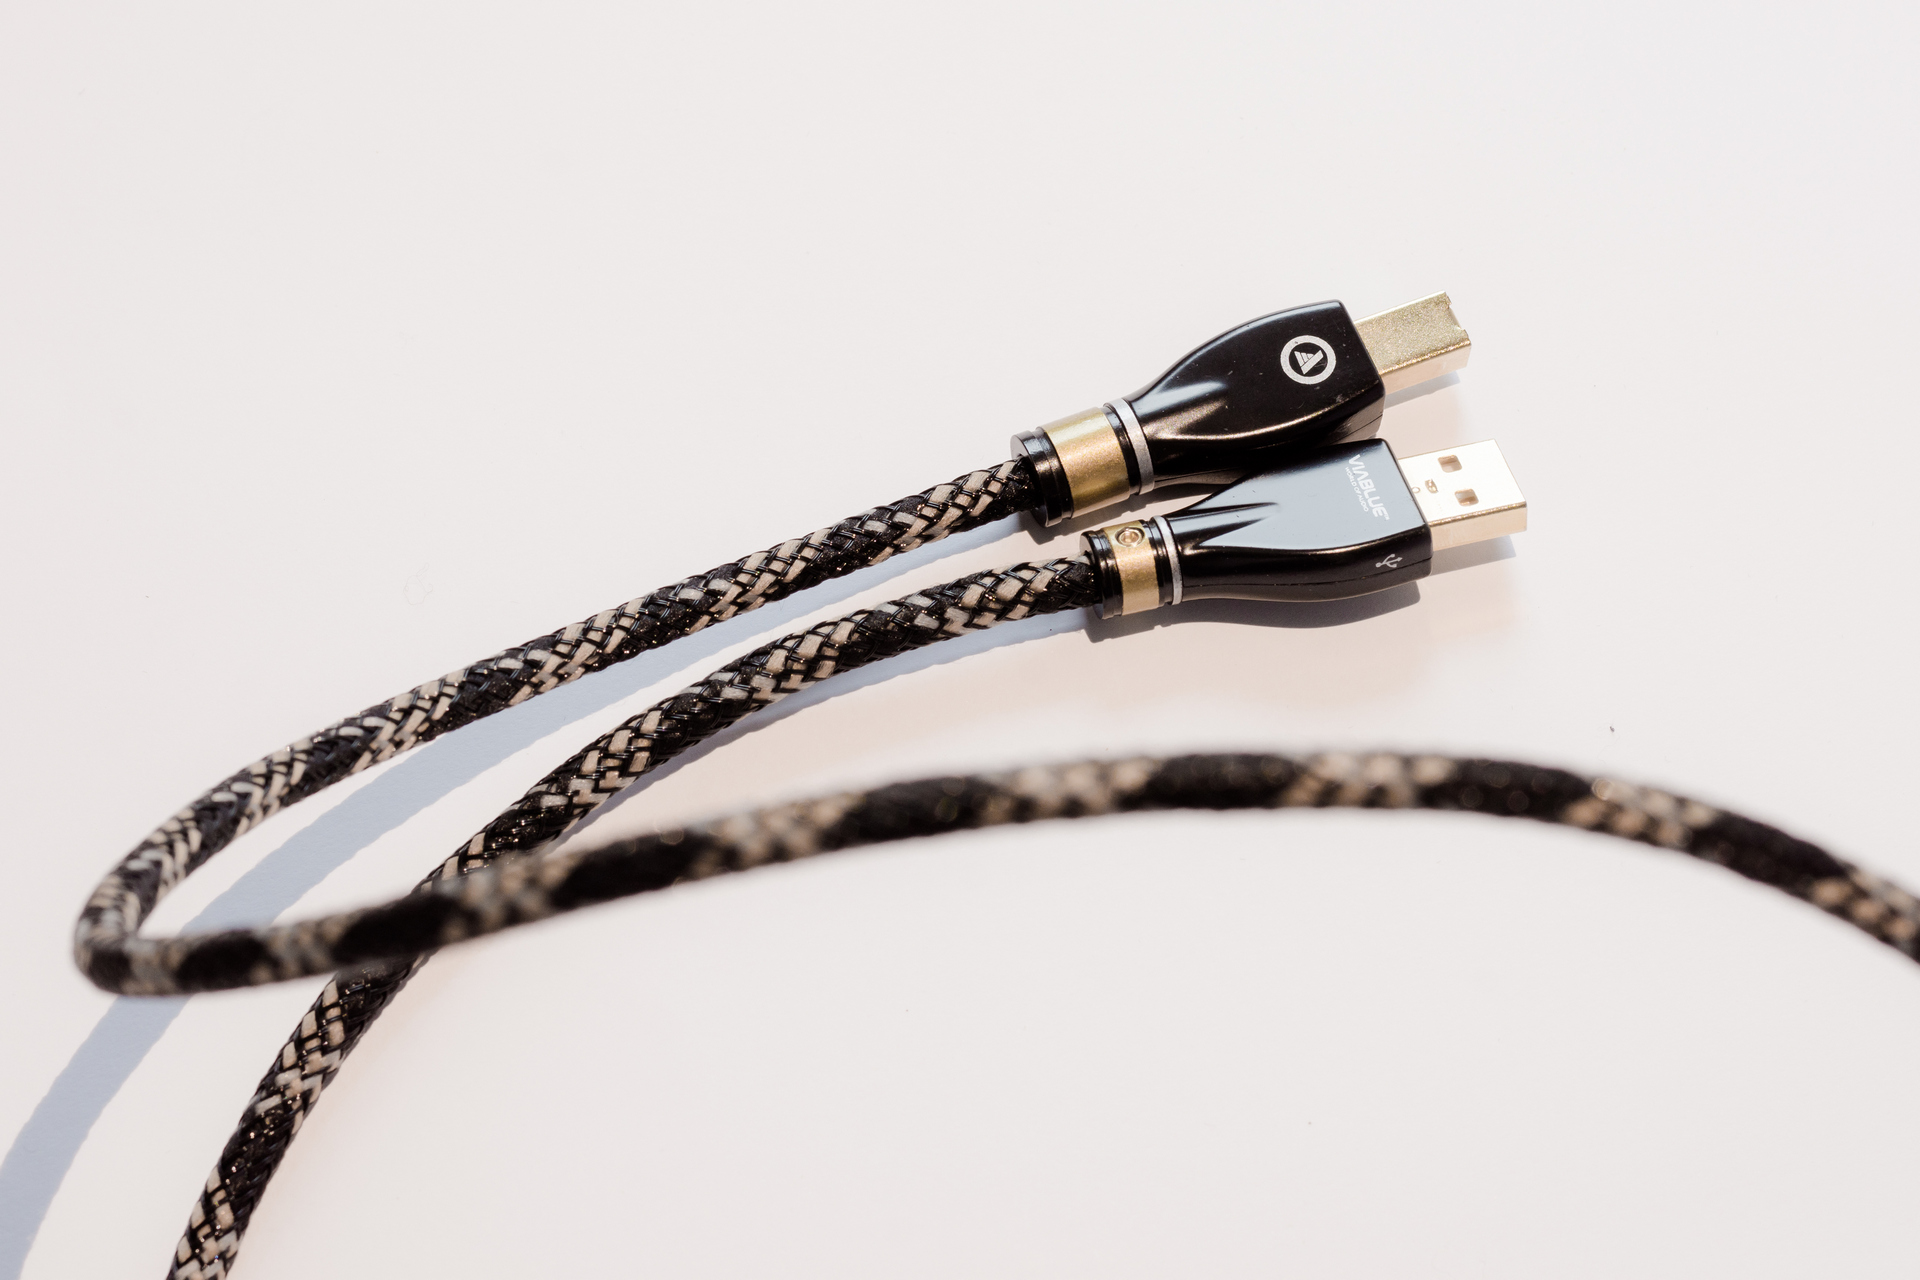 1,00m ViaBlue KR-2 SILVER USB-KABEL A/MINI-BLänge